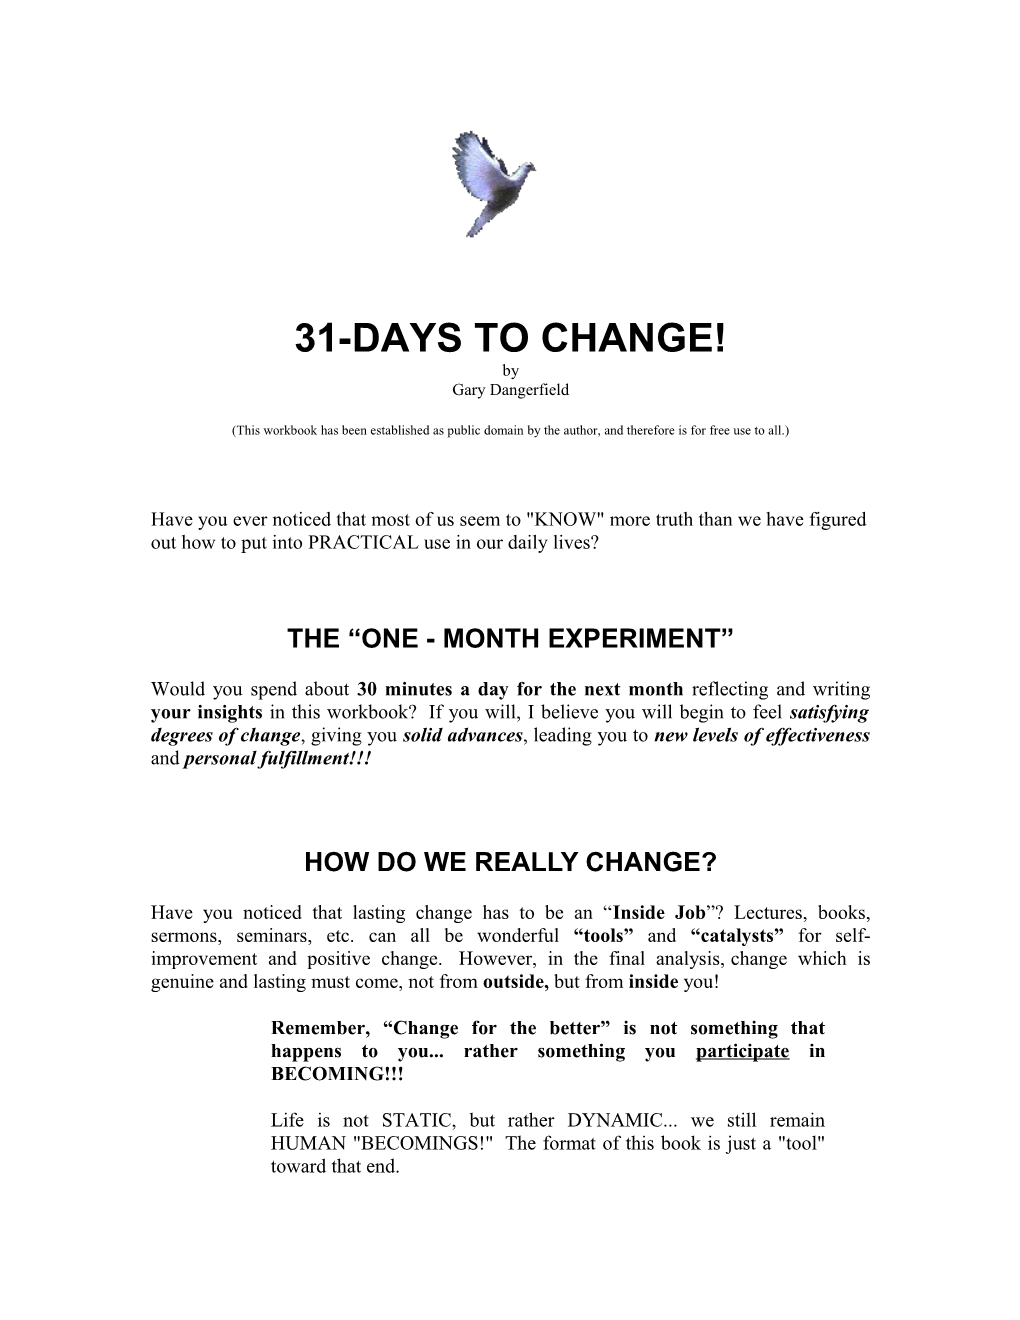 31-Days to Change